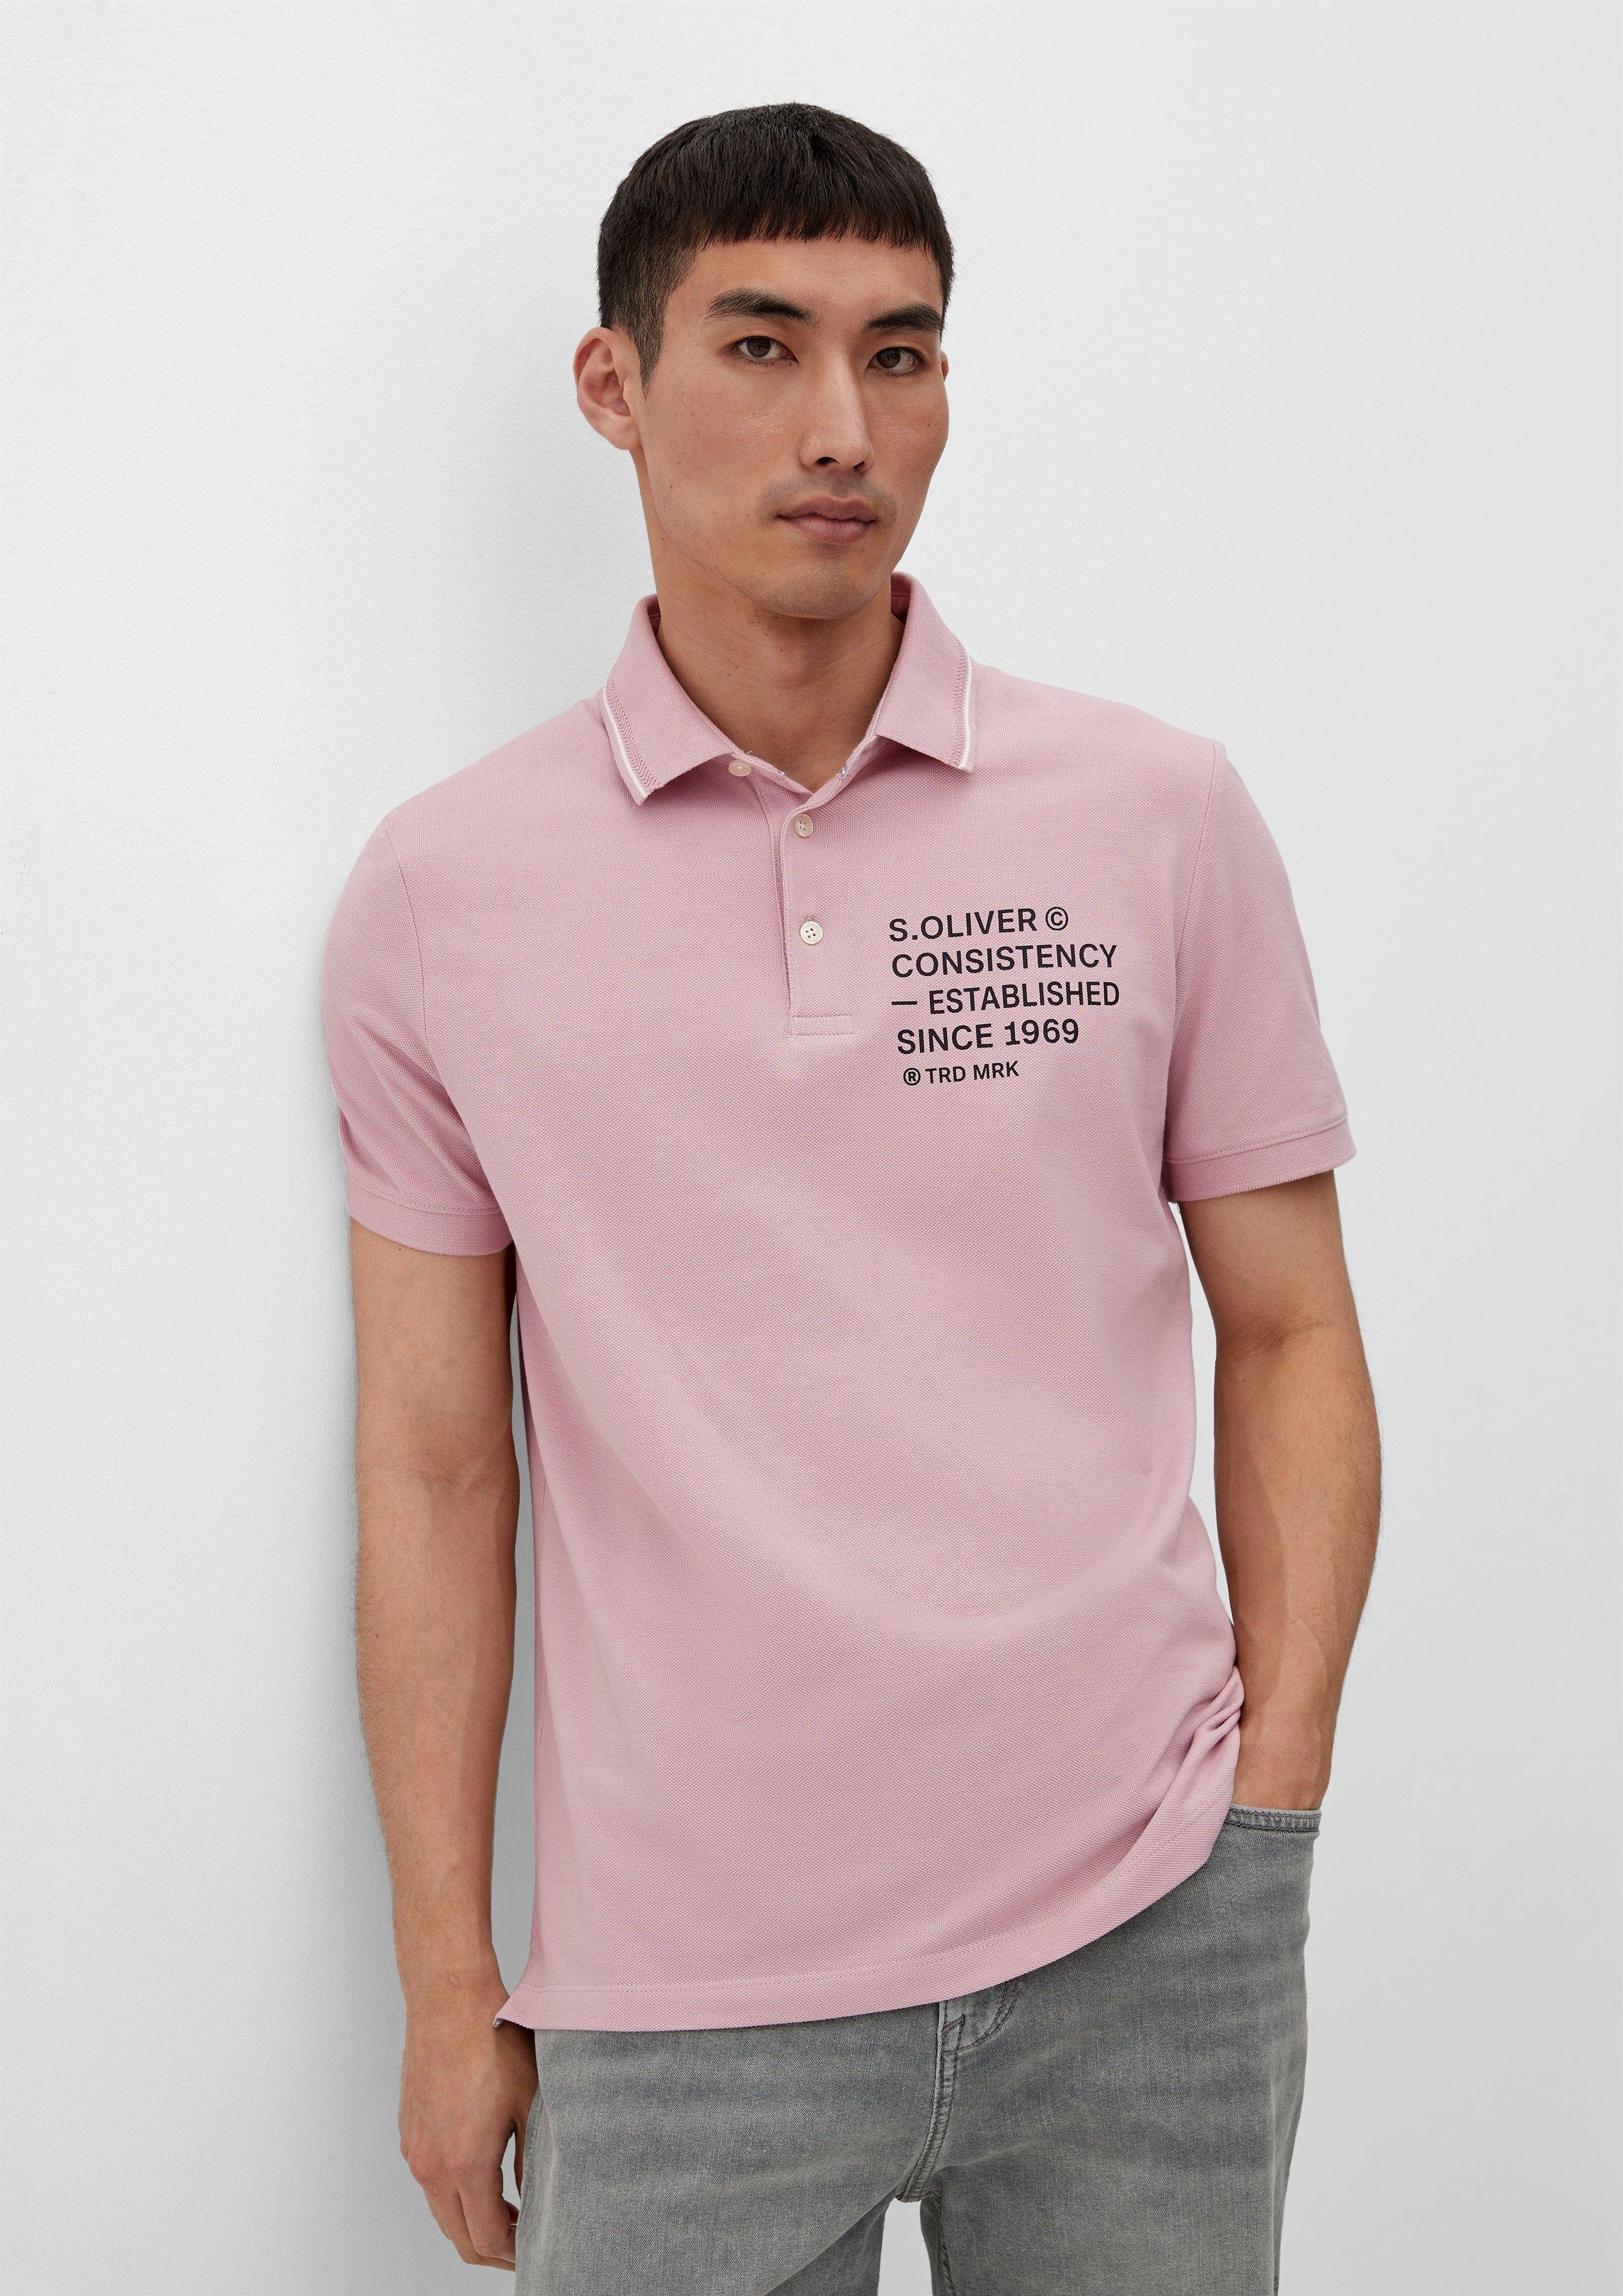 s.Oliver Kurzarmshirt Poloshirt mit Piquéstruktur Artwork, Blende zartrosa